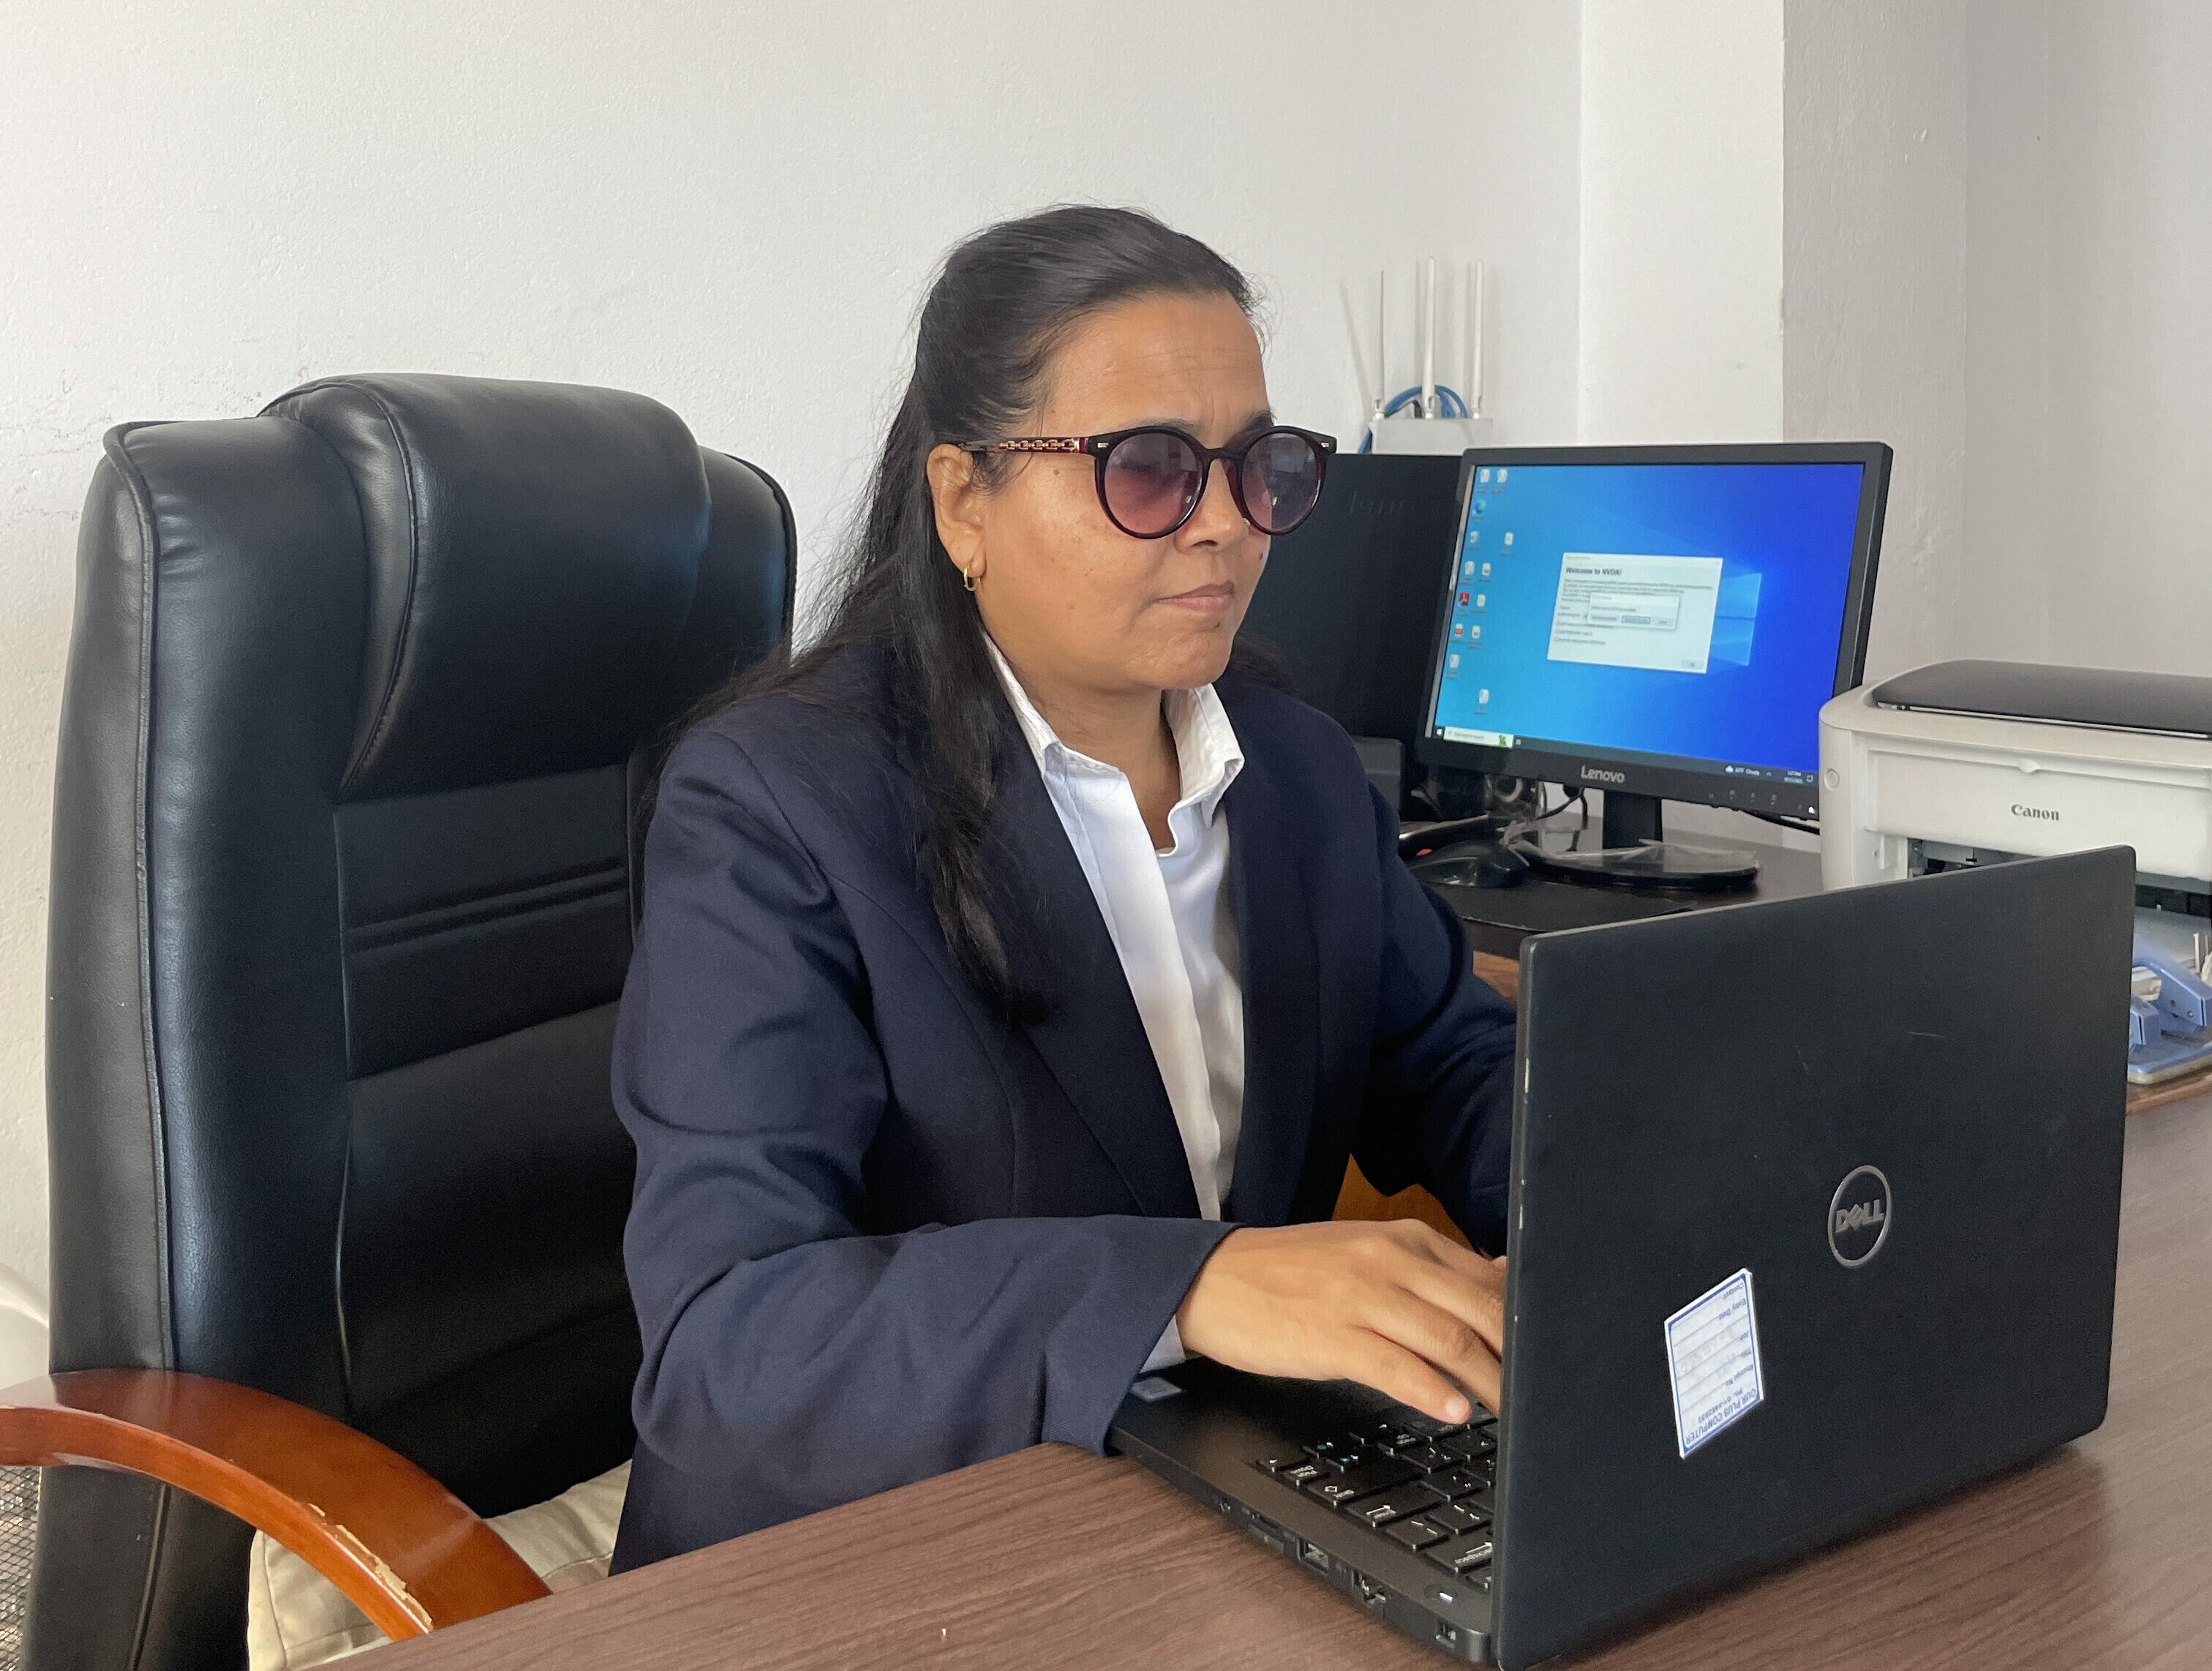 Neera Adhikari types on a computer at her desk.